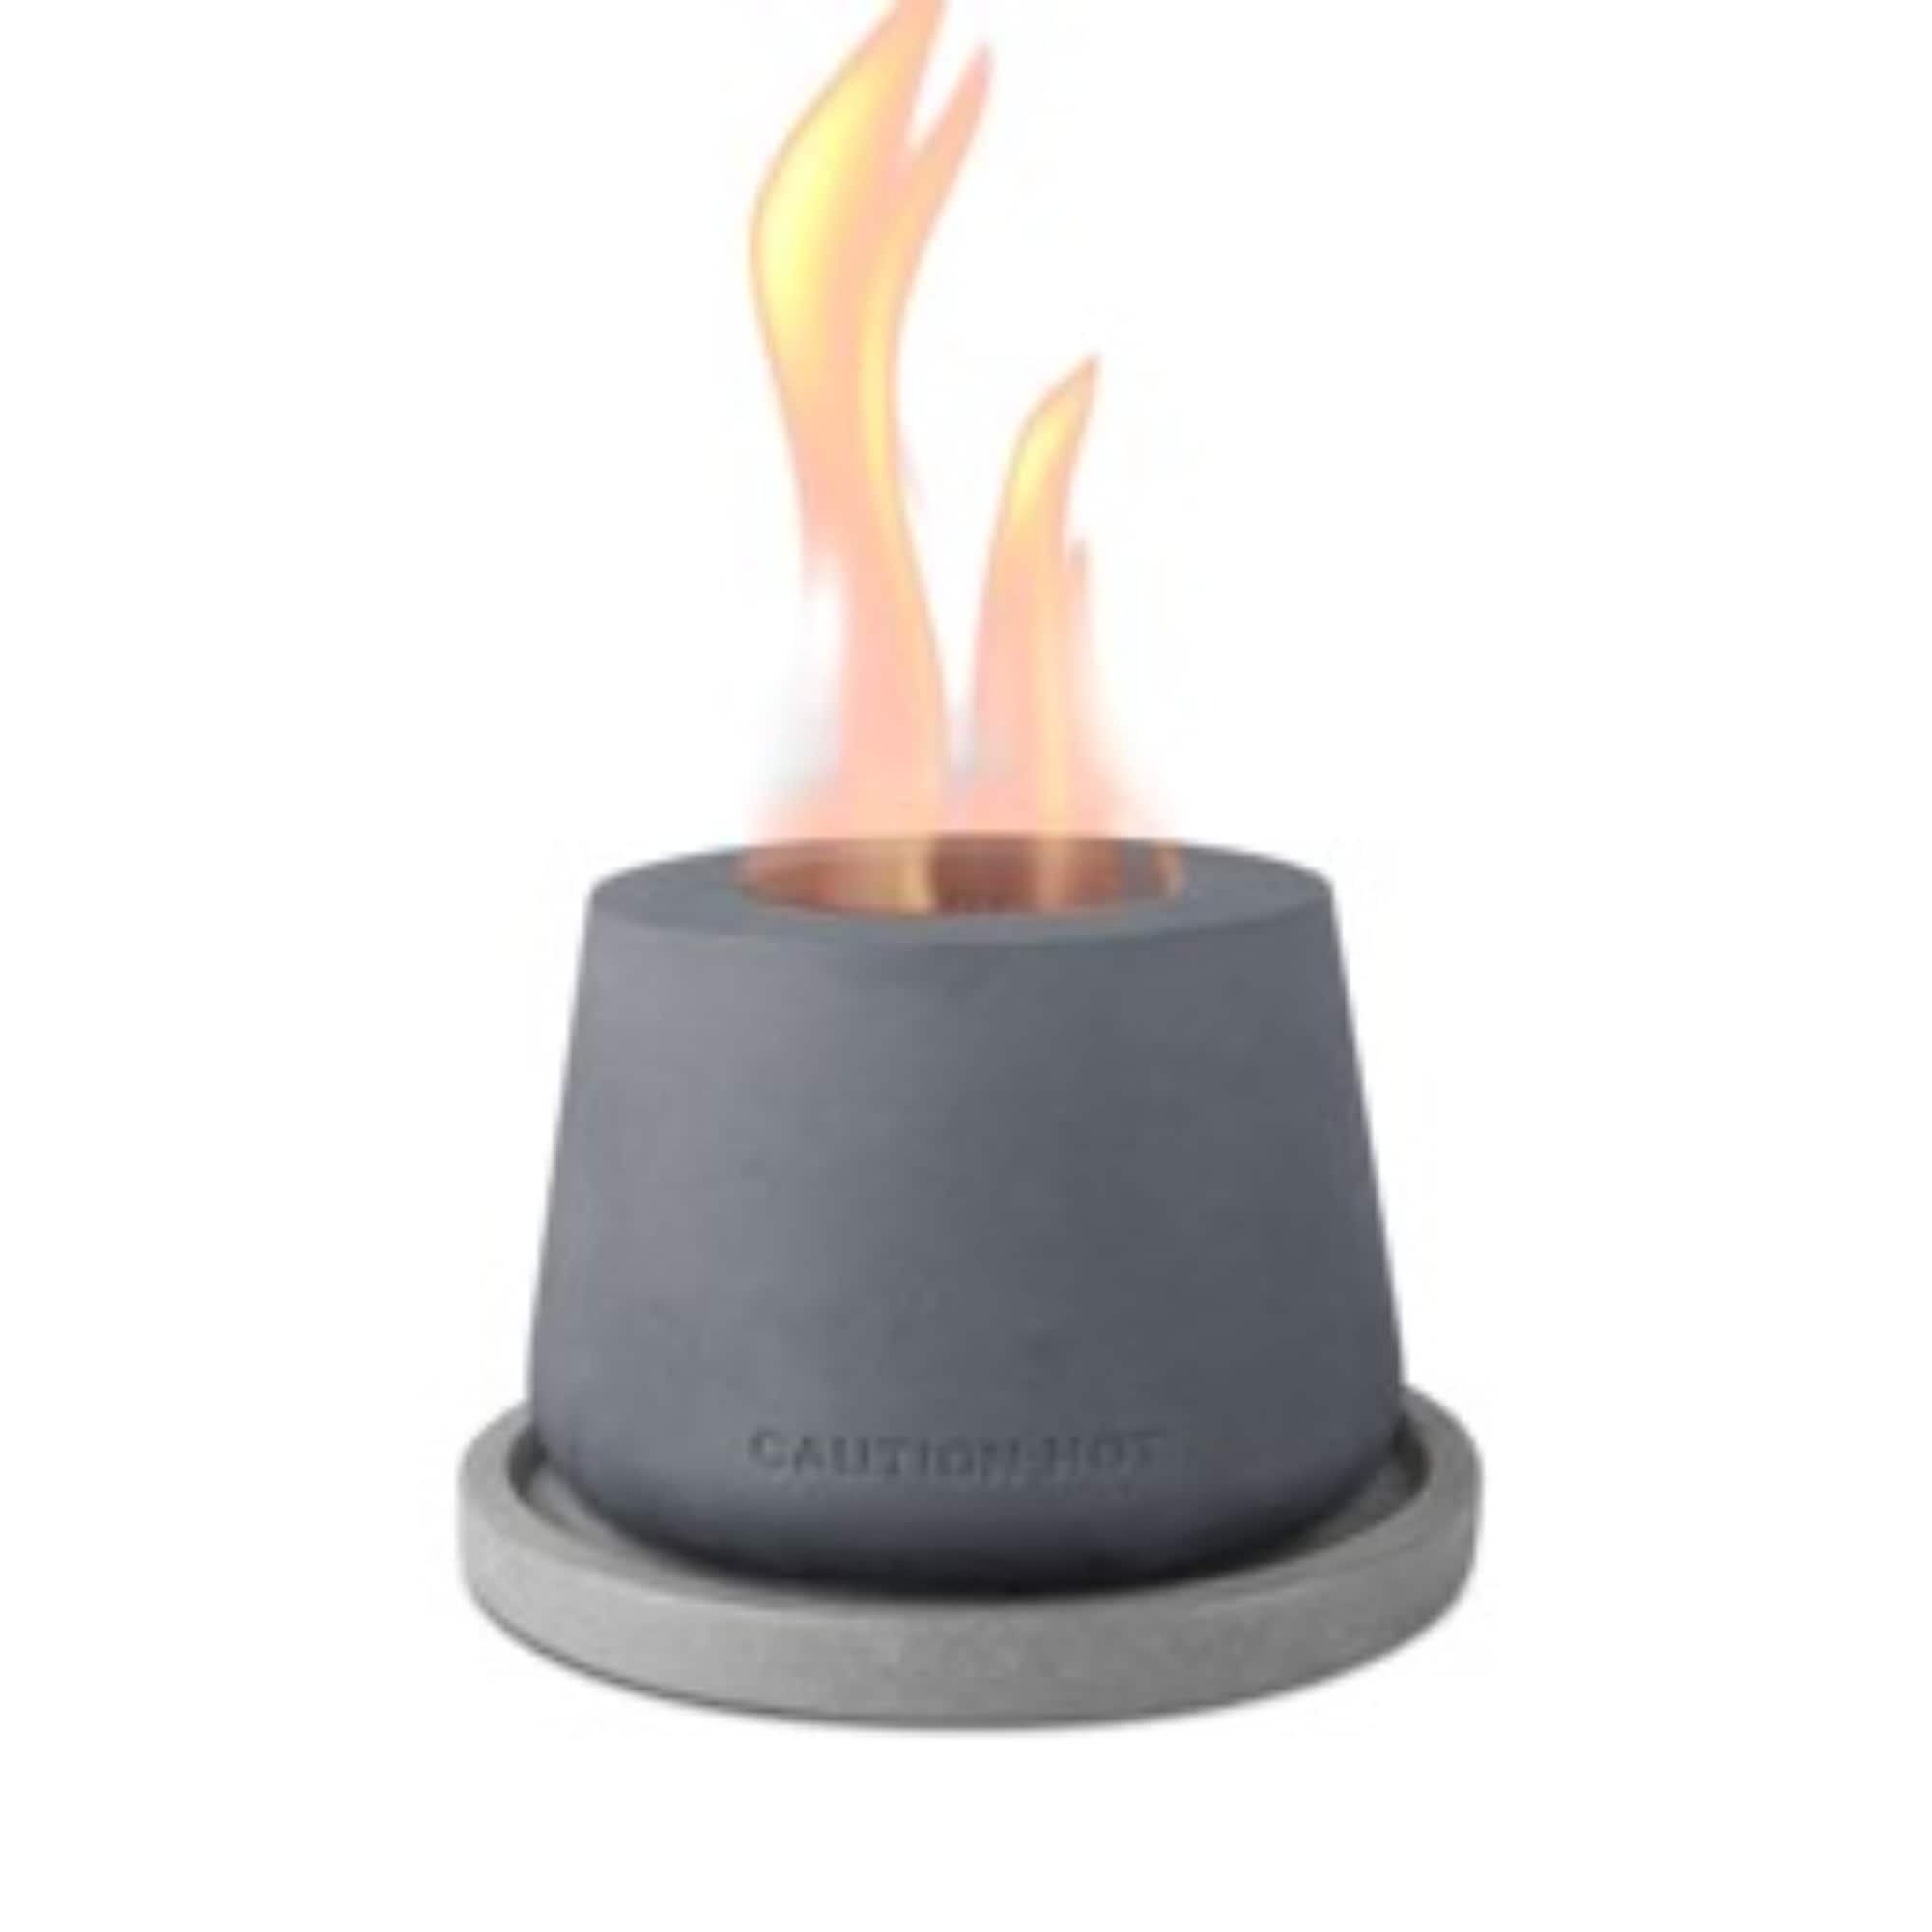 Tabletop Fire Pit - Metal Black, Portable Fire Pits, No Ethanol